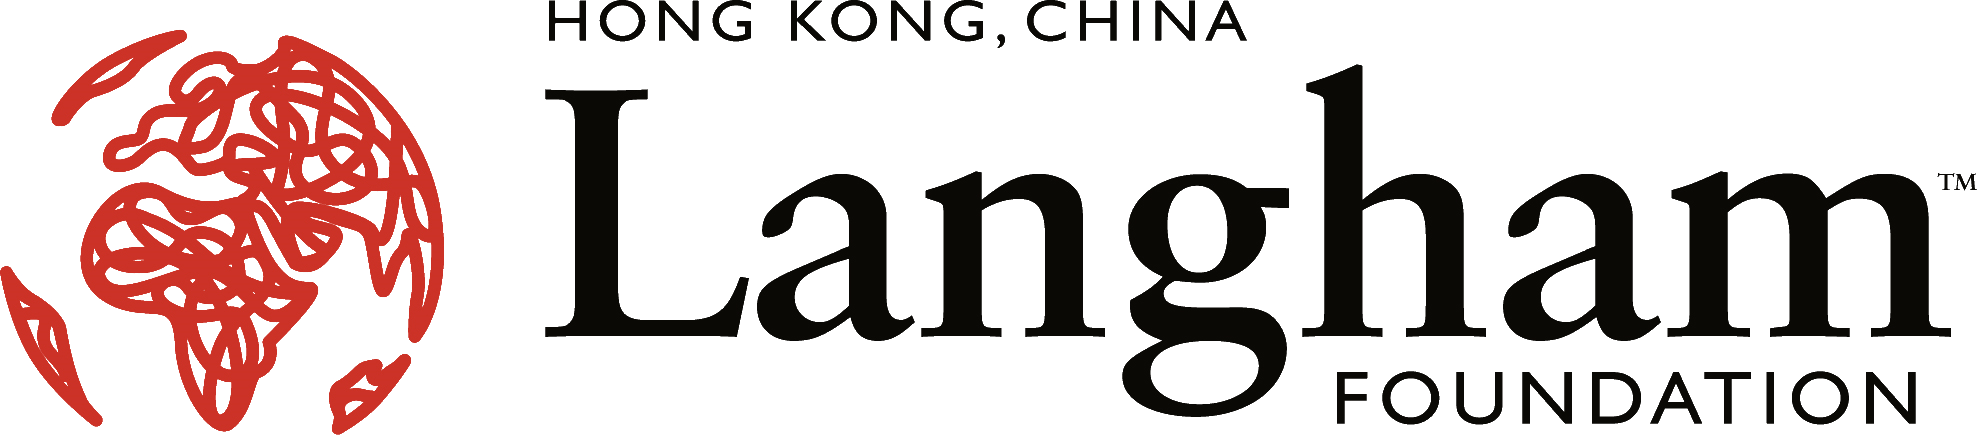 logo_new_HK_eng_trans